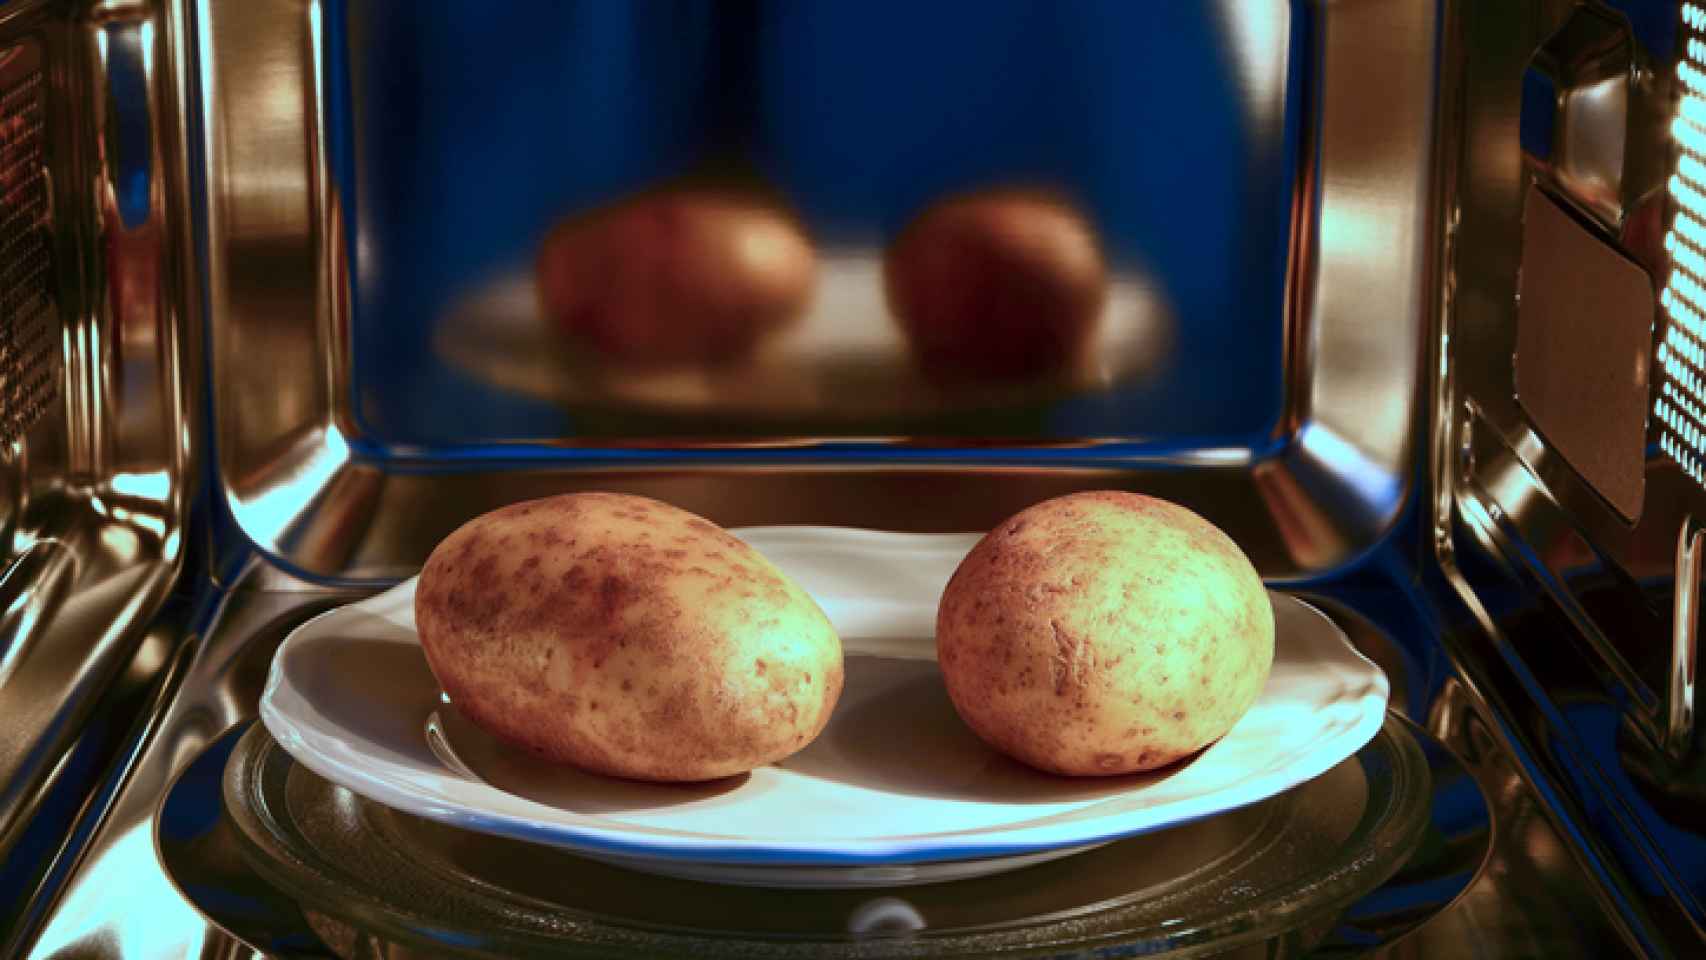 Receta patatas al microondas (cocidas) paso a paso.